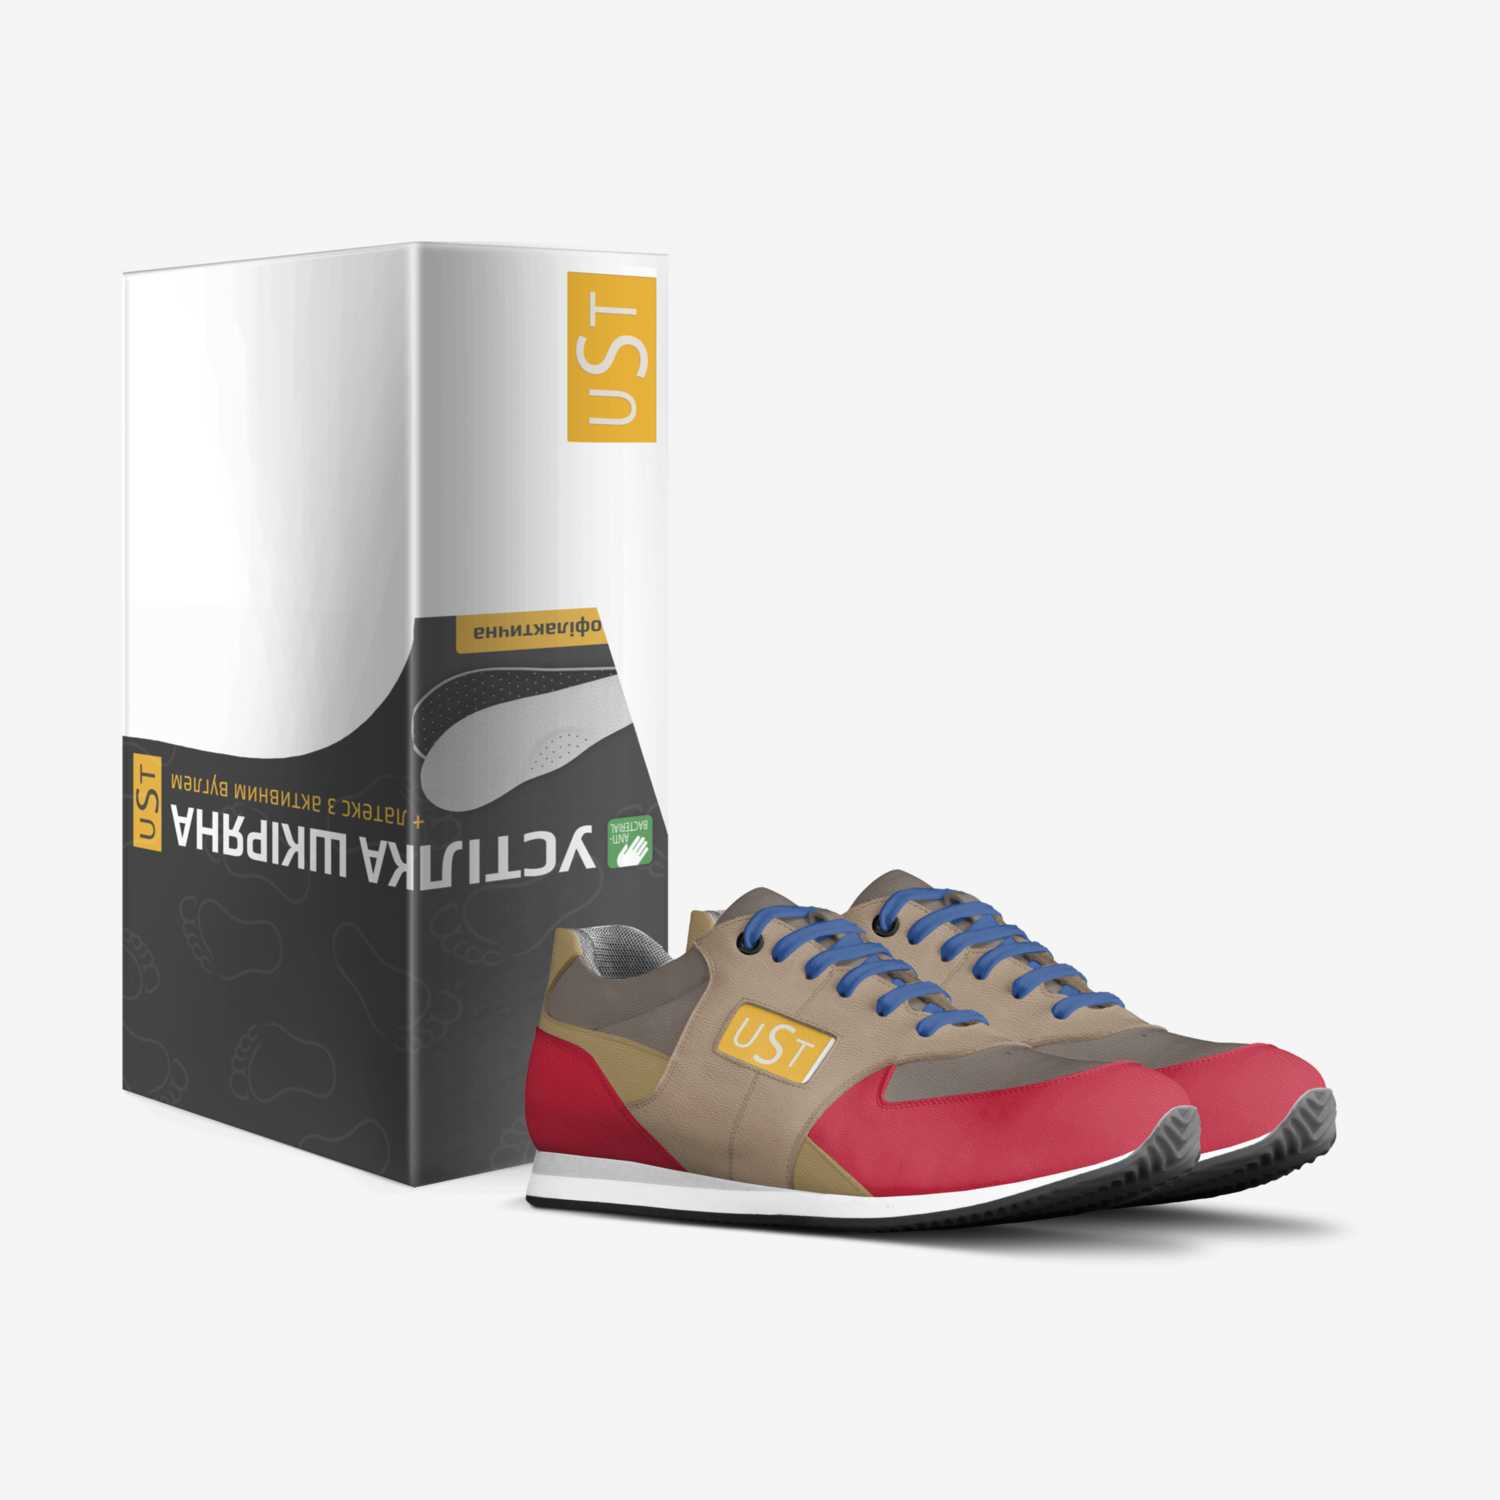 Klio custom made in Italy shoes by Vitaly Gnatyshyn | Box view